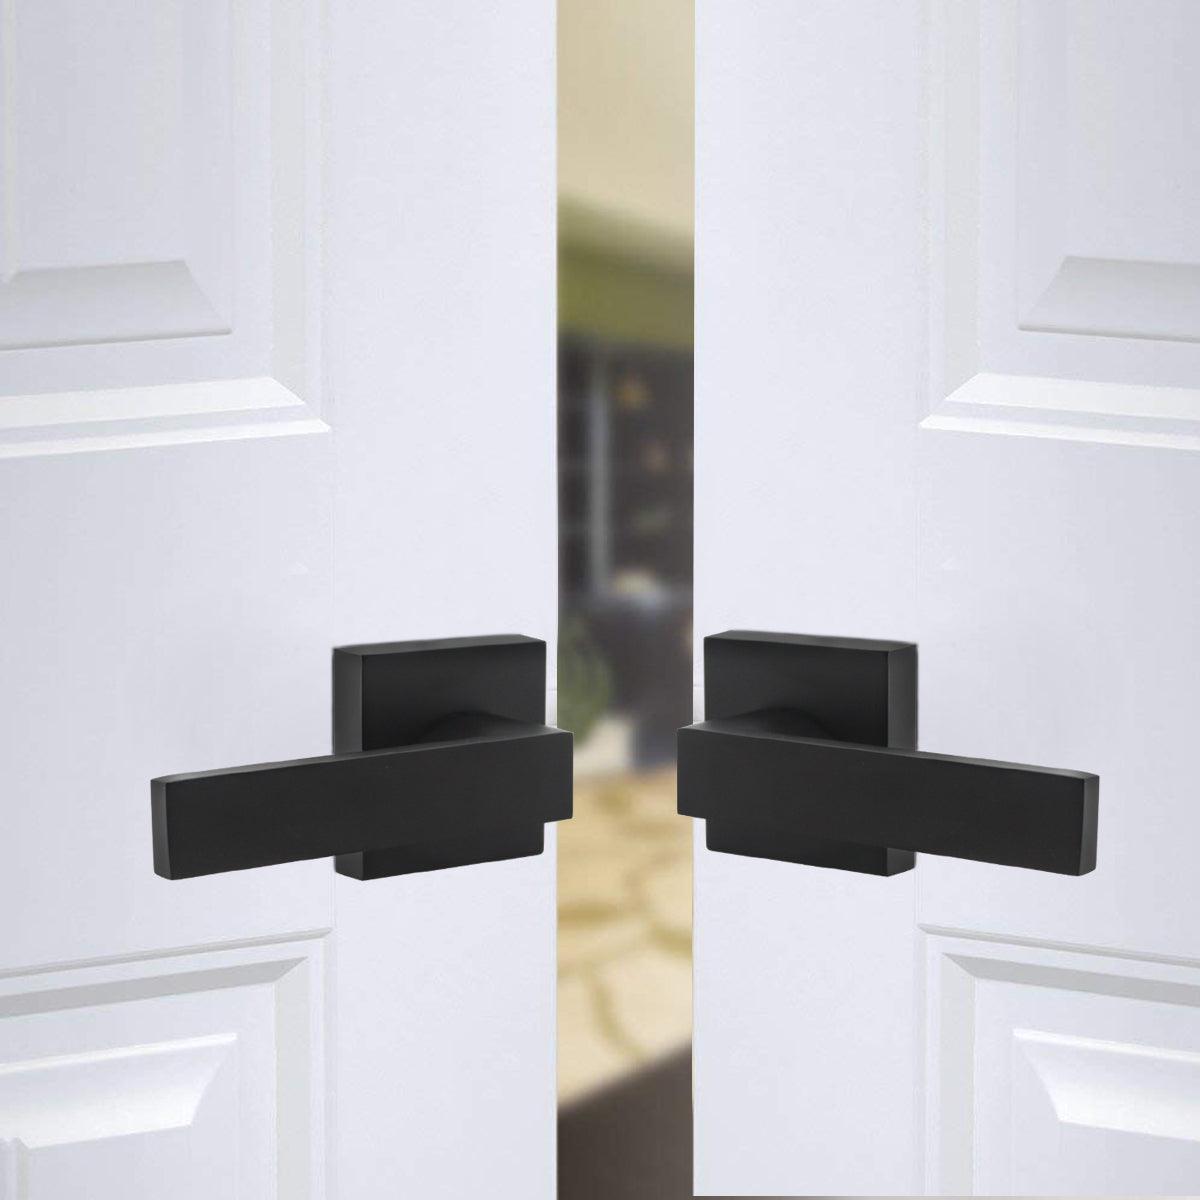 Black Door Handles Heavy Duty Keyed/Keyed Alike/Privacy/Passage/Dummy Door Lock Levers DL01BK - Probrico